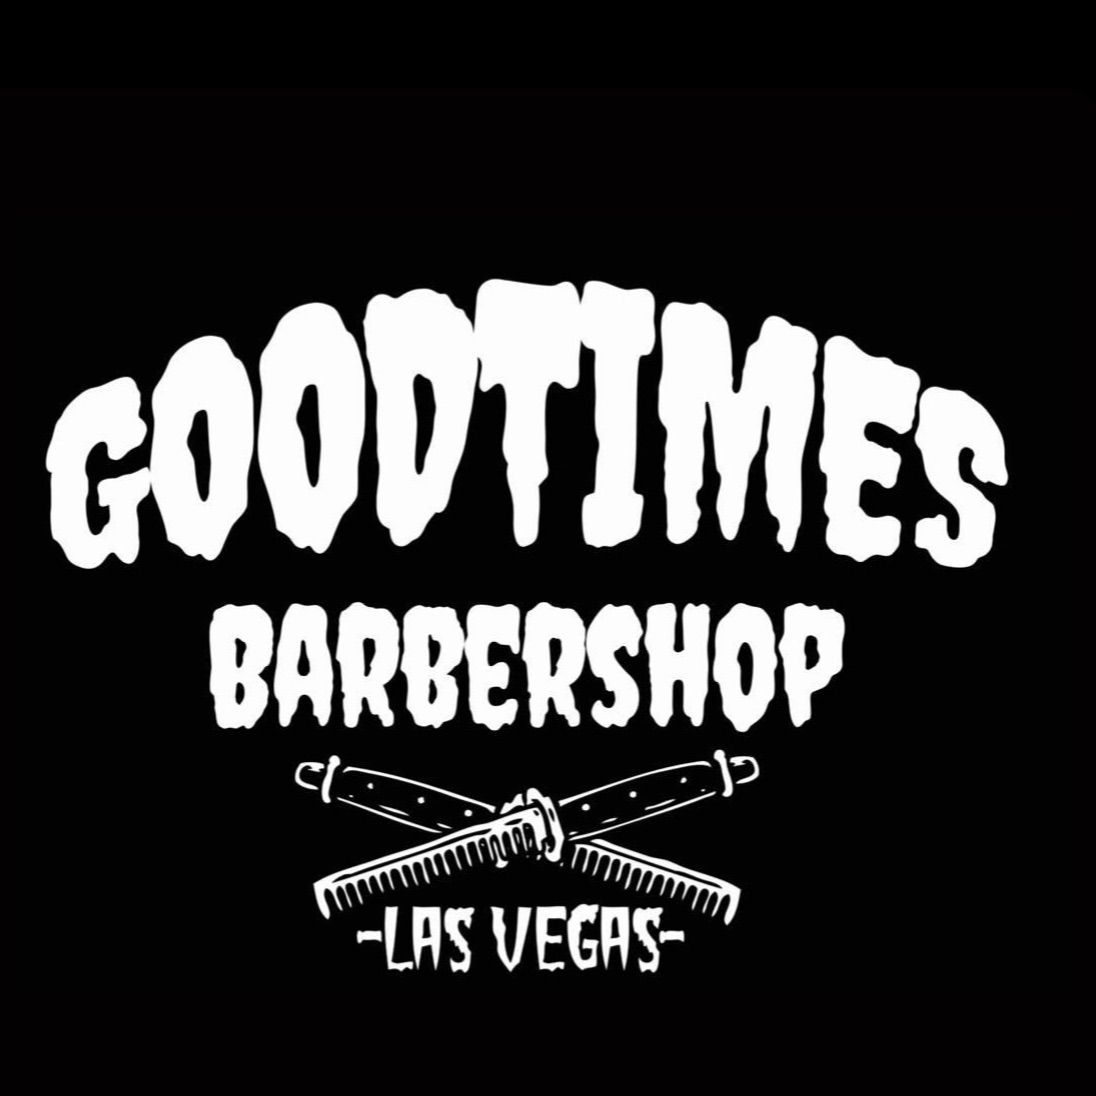 Goodtimes barbershop & shave parlor, 3803 W Sahara Ave, Las Vegas, 89102